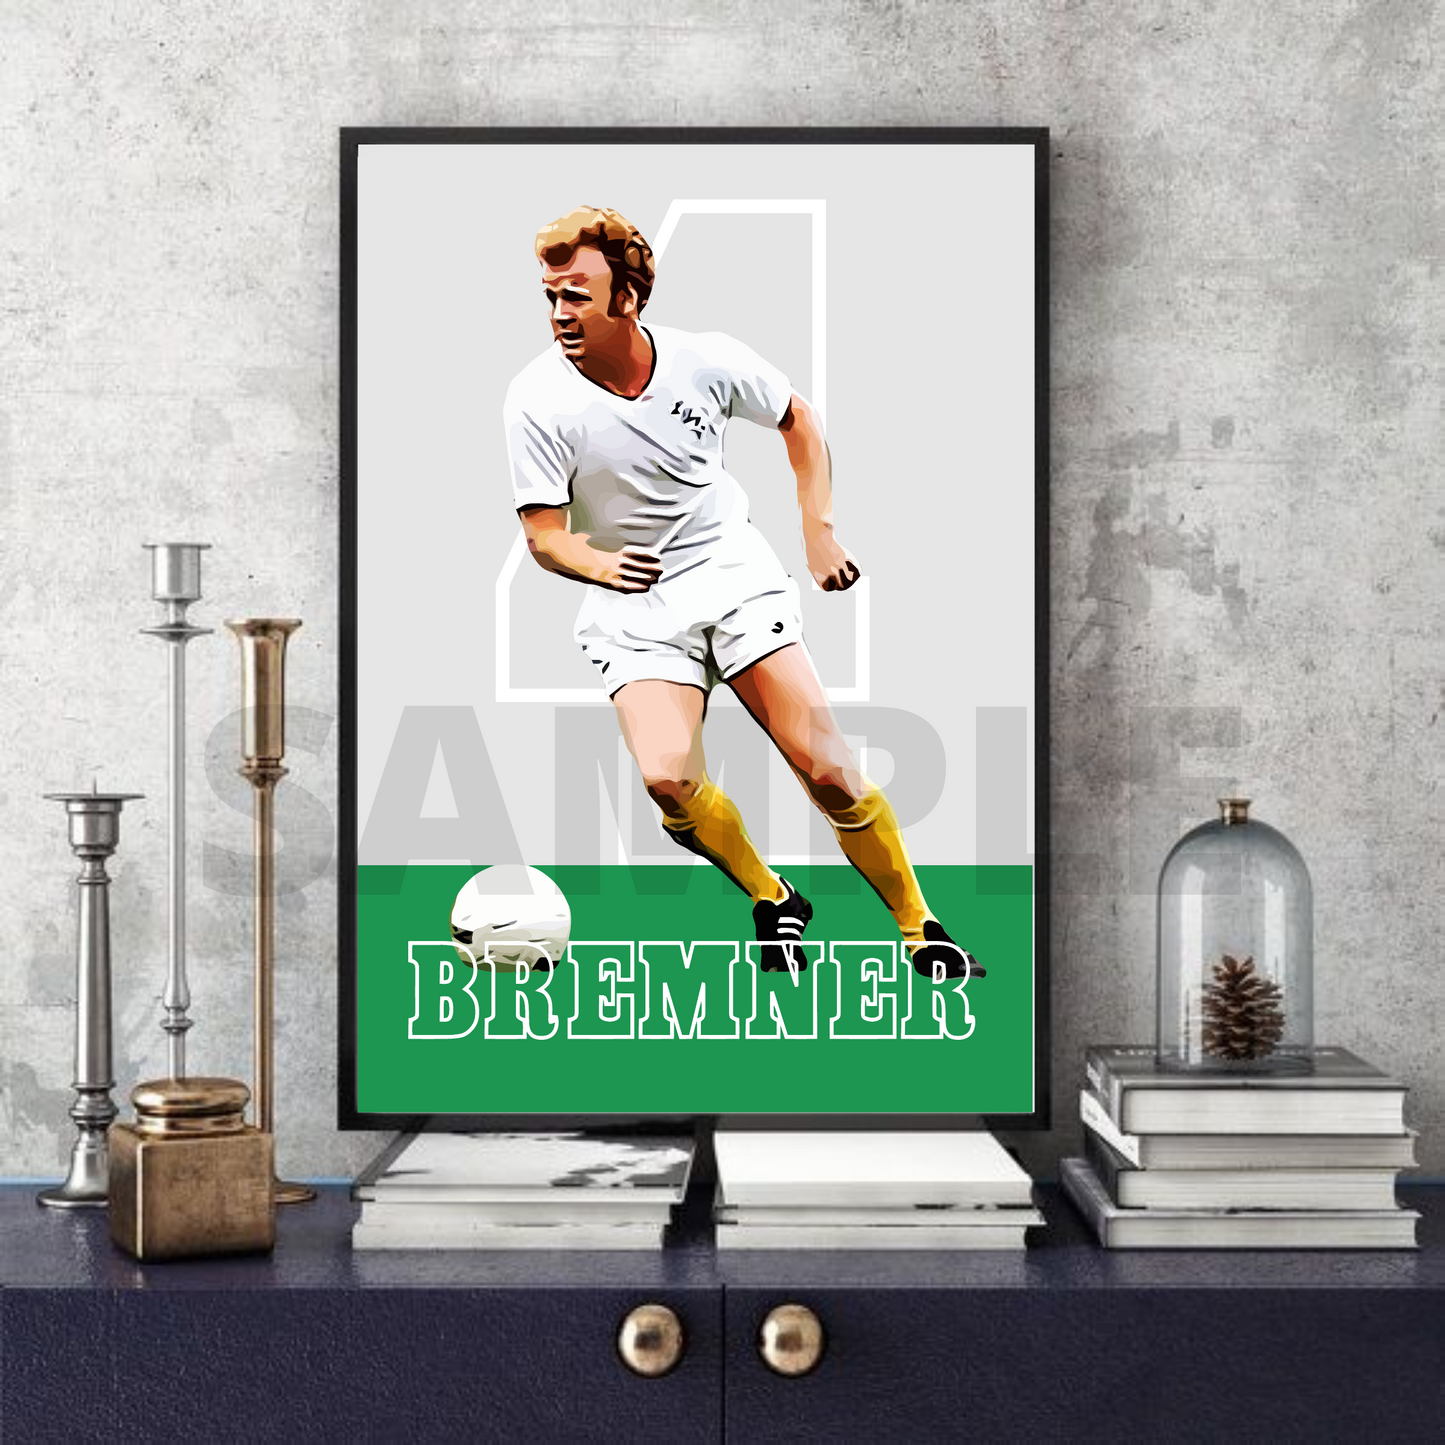 King Billy Bremner - Leeds United legend Football memorabilia/collectable print